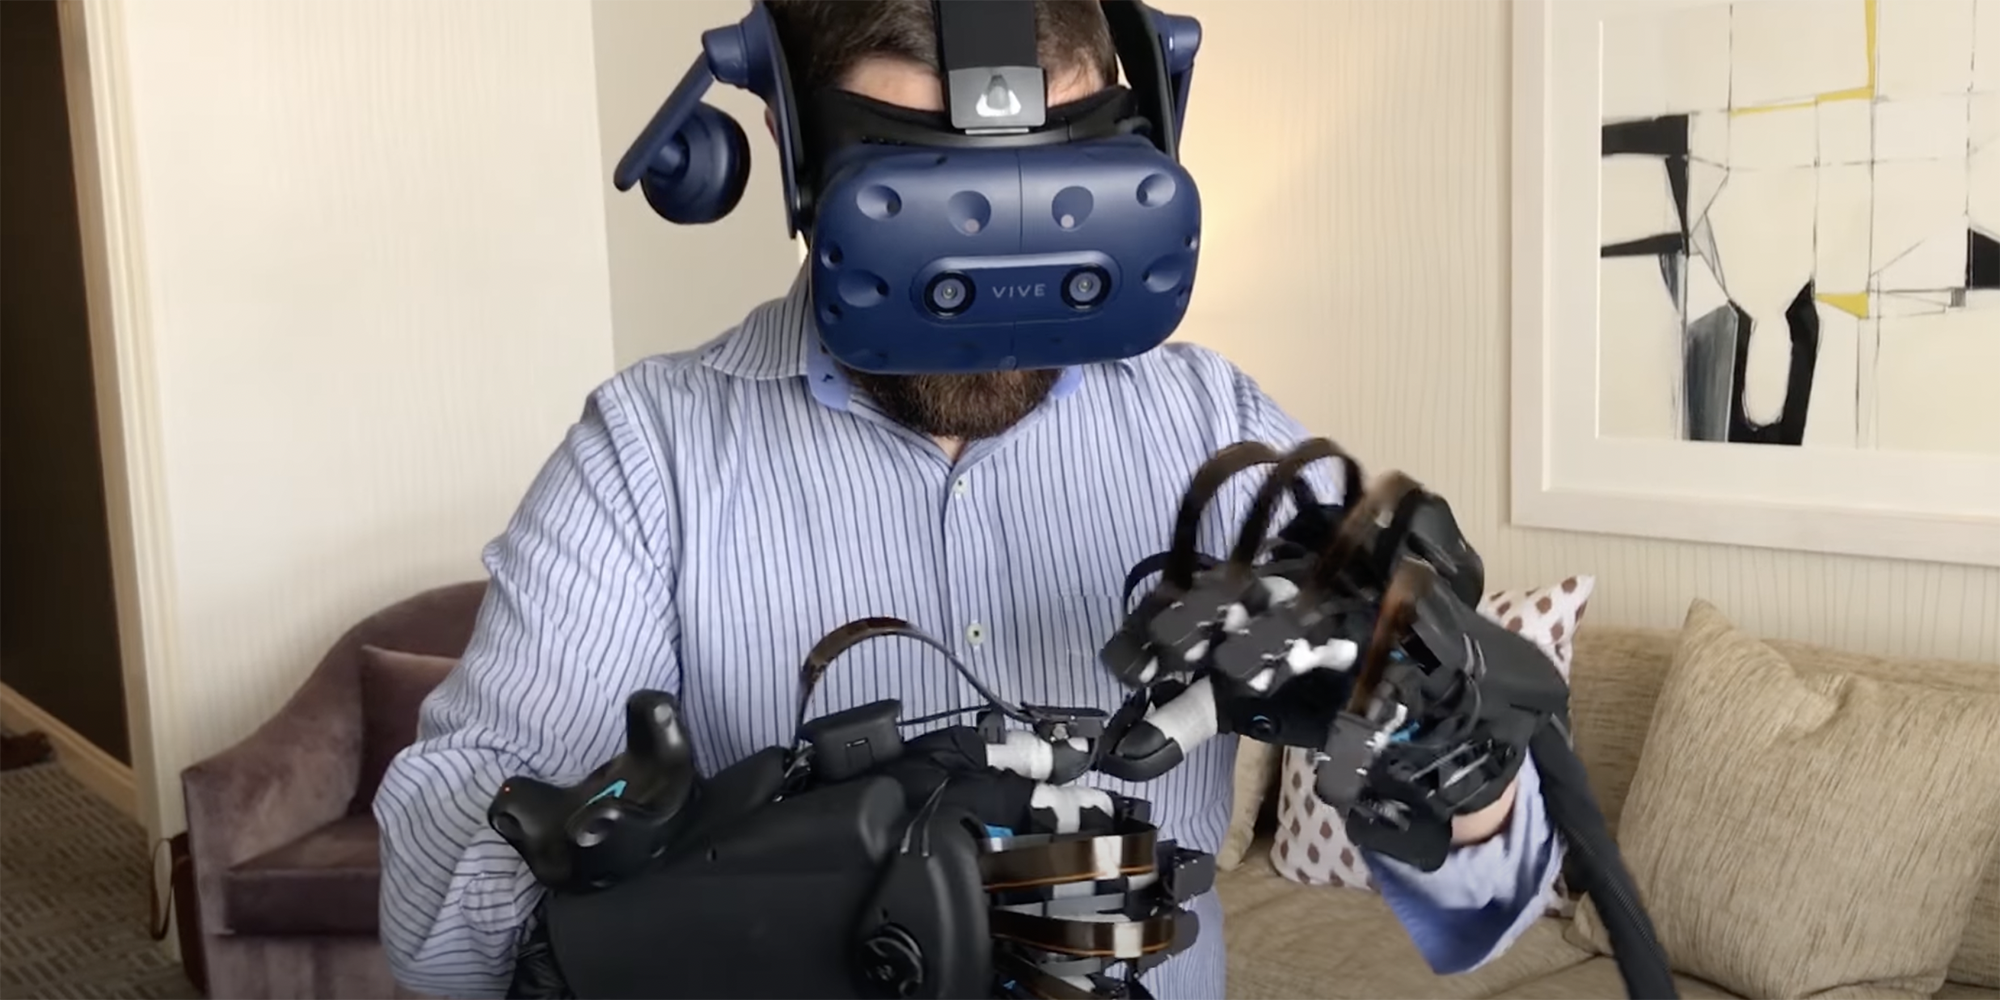 HaptX VR haptic gloves